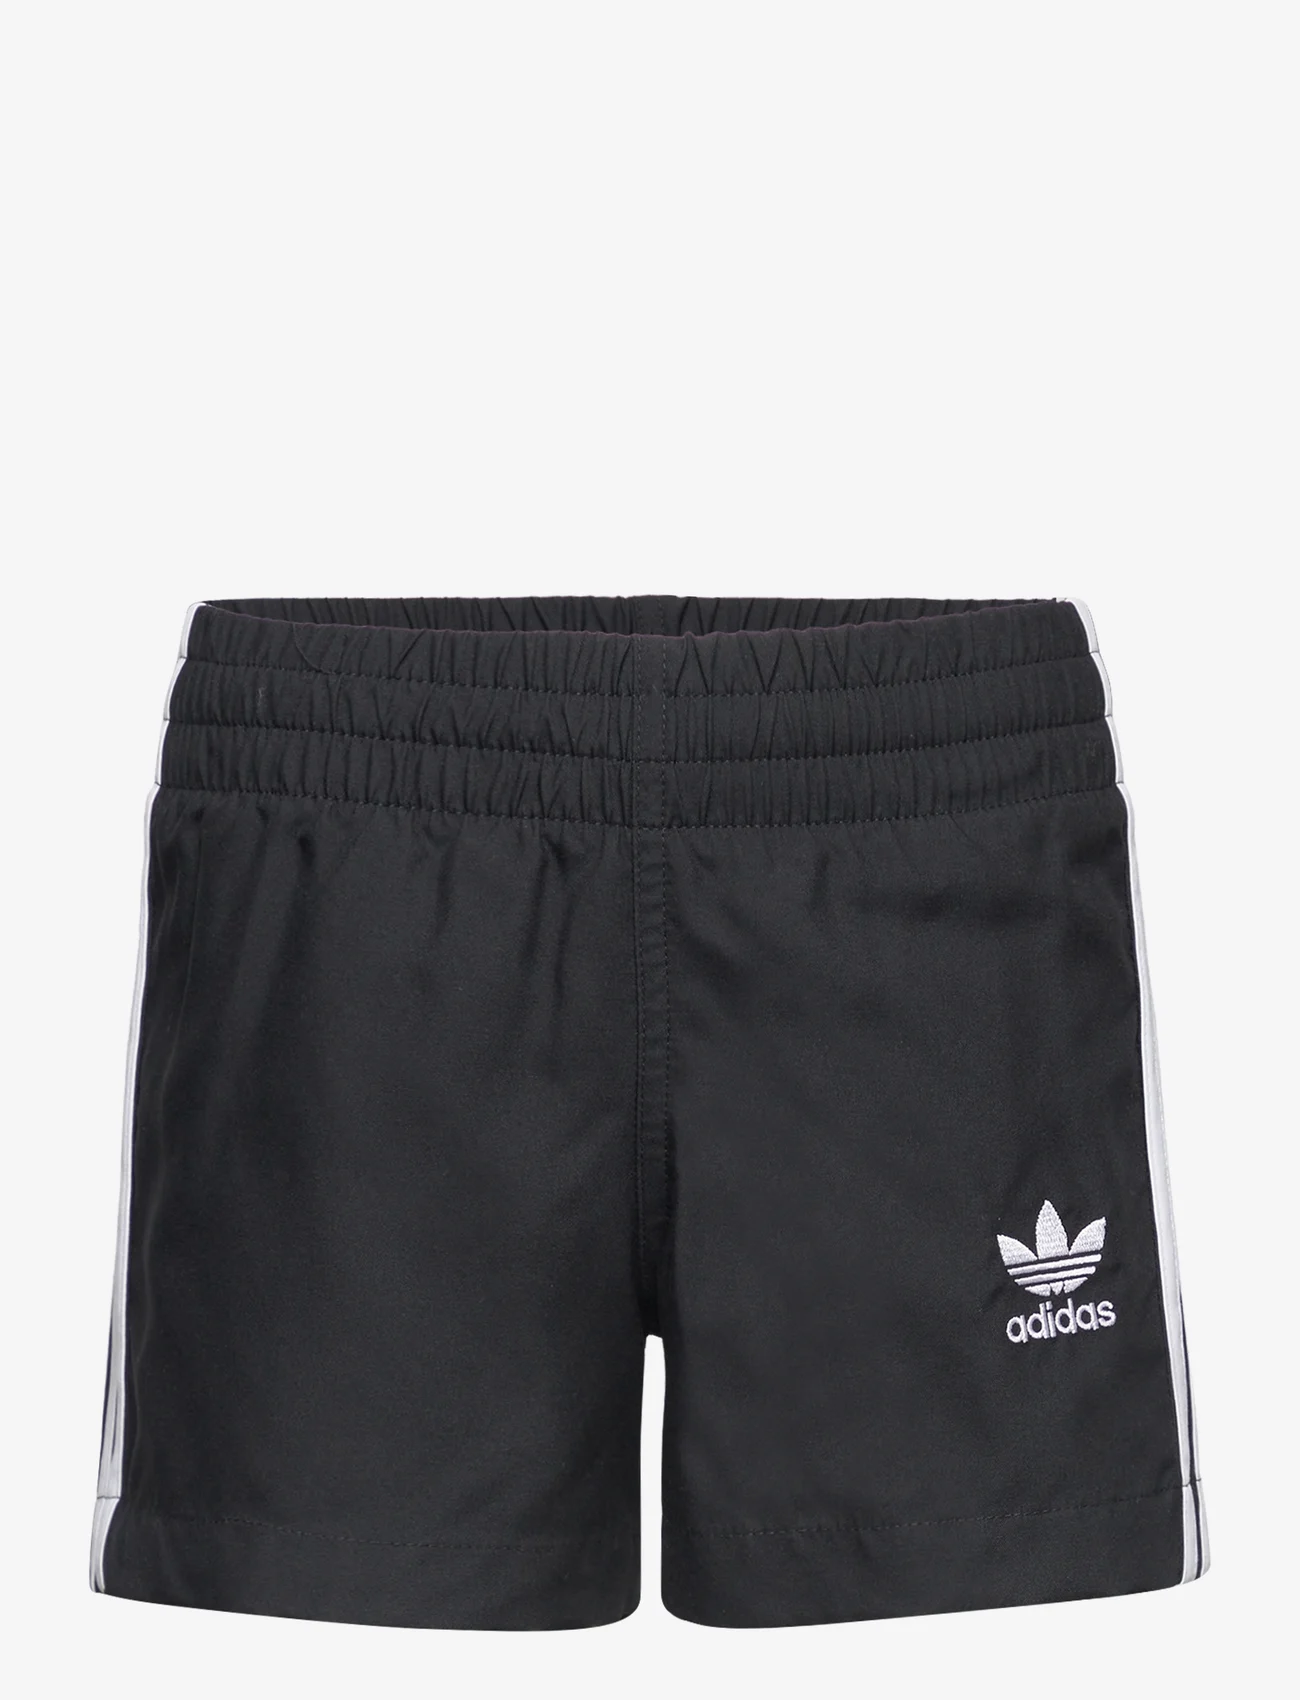 adidas Performance - ORI 3S SHO - swim shorts - black/white - 0